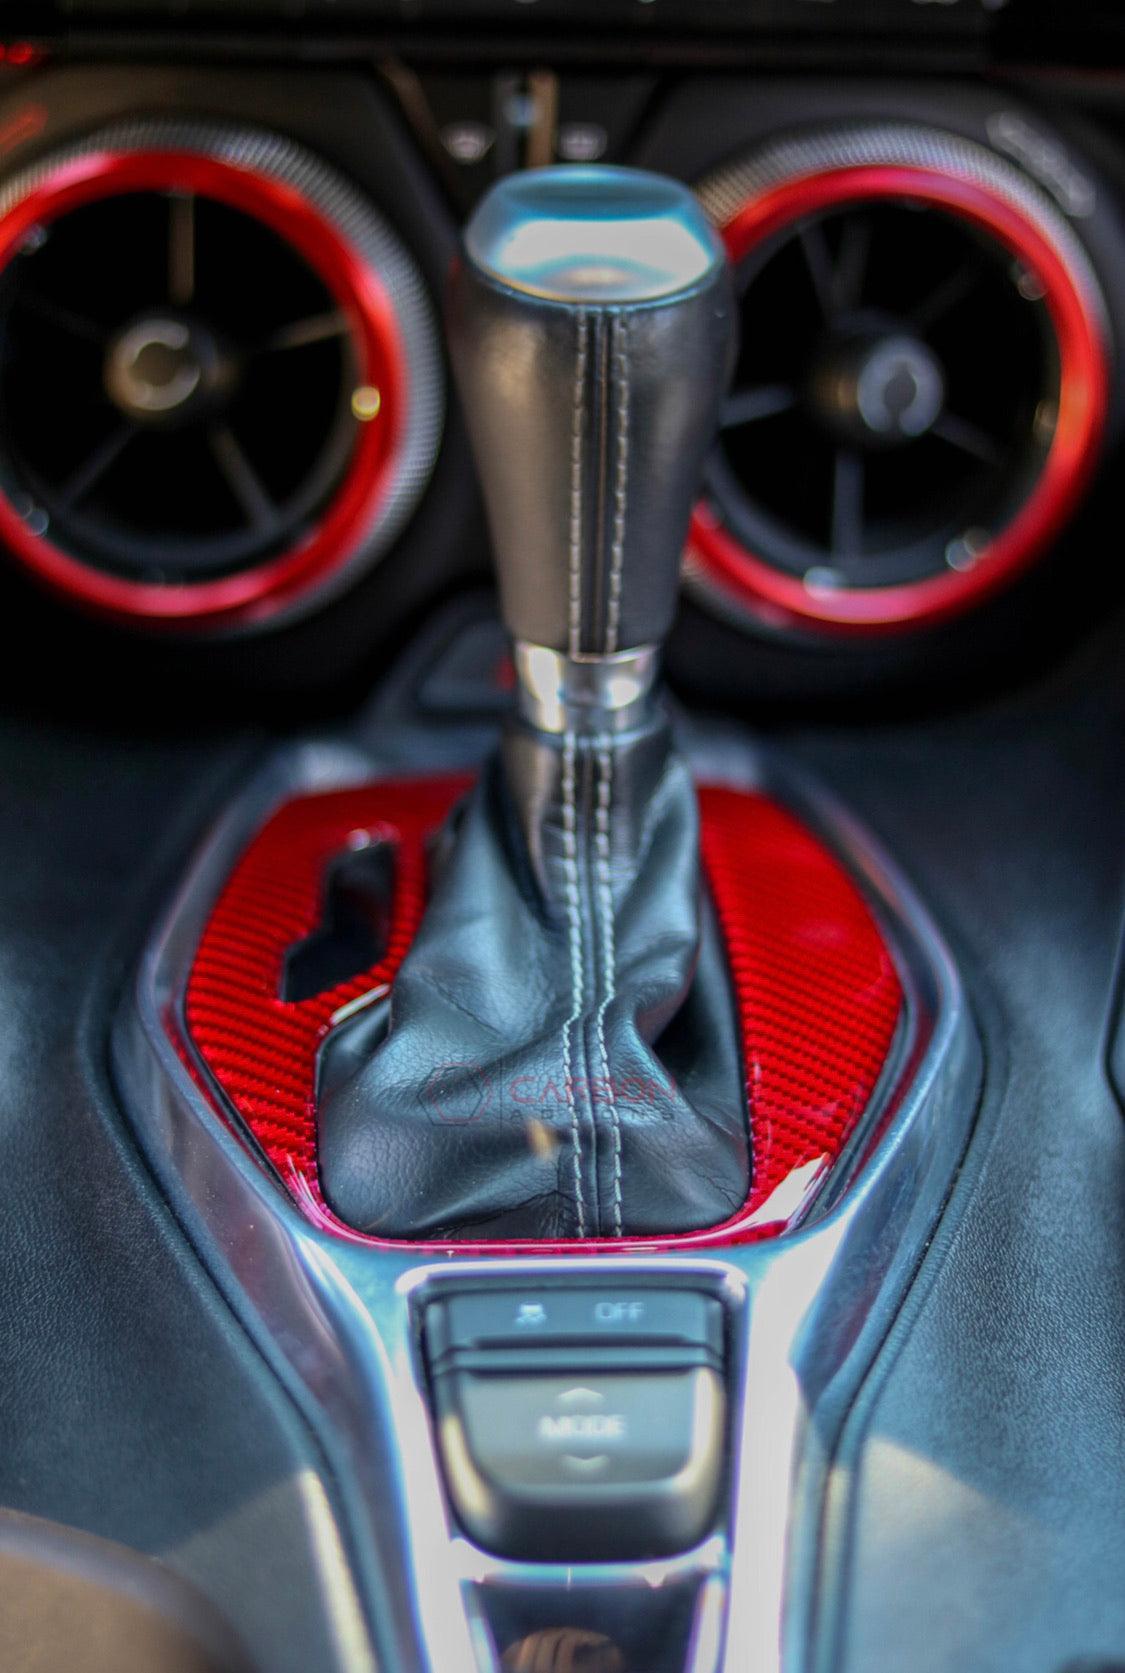 2016-2024 Camaro Real Carbon Fiber Gear Shift Trim Overlay - carbonaddons Carbon Fiber Parts, Accessories, Upgrades, Mods